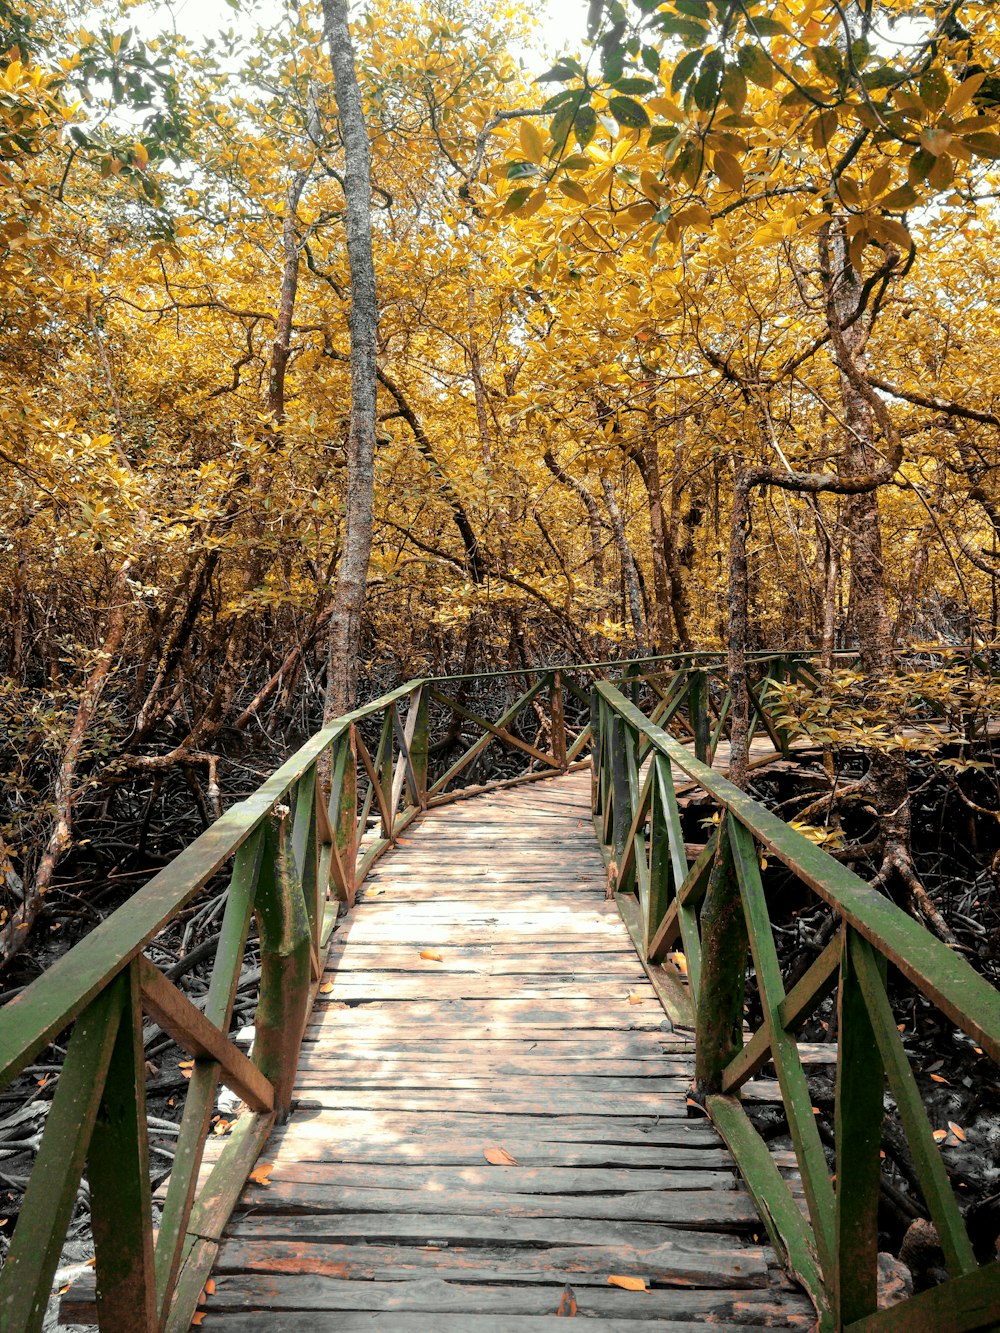 brown wooden bridge between yellow leaf trees